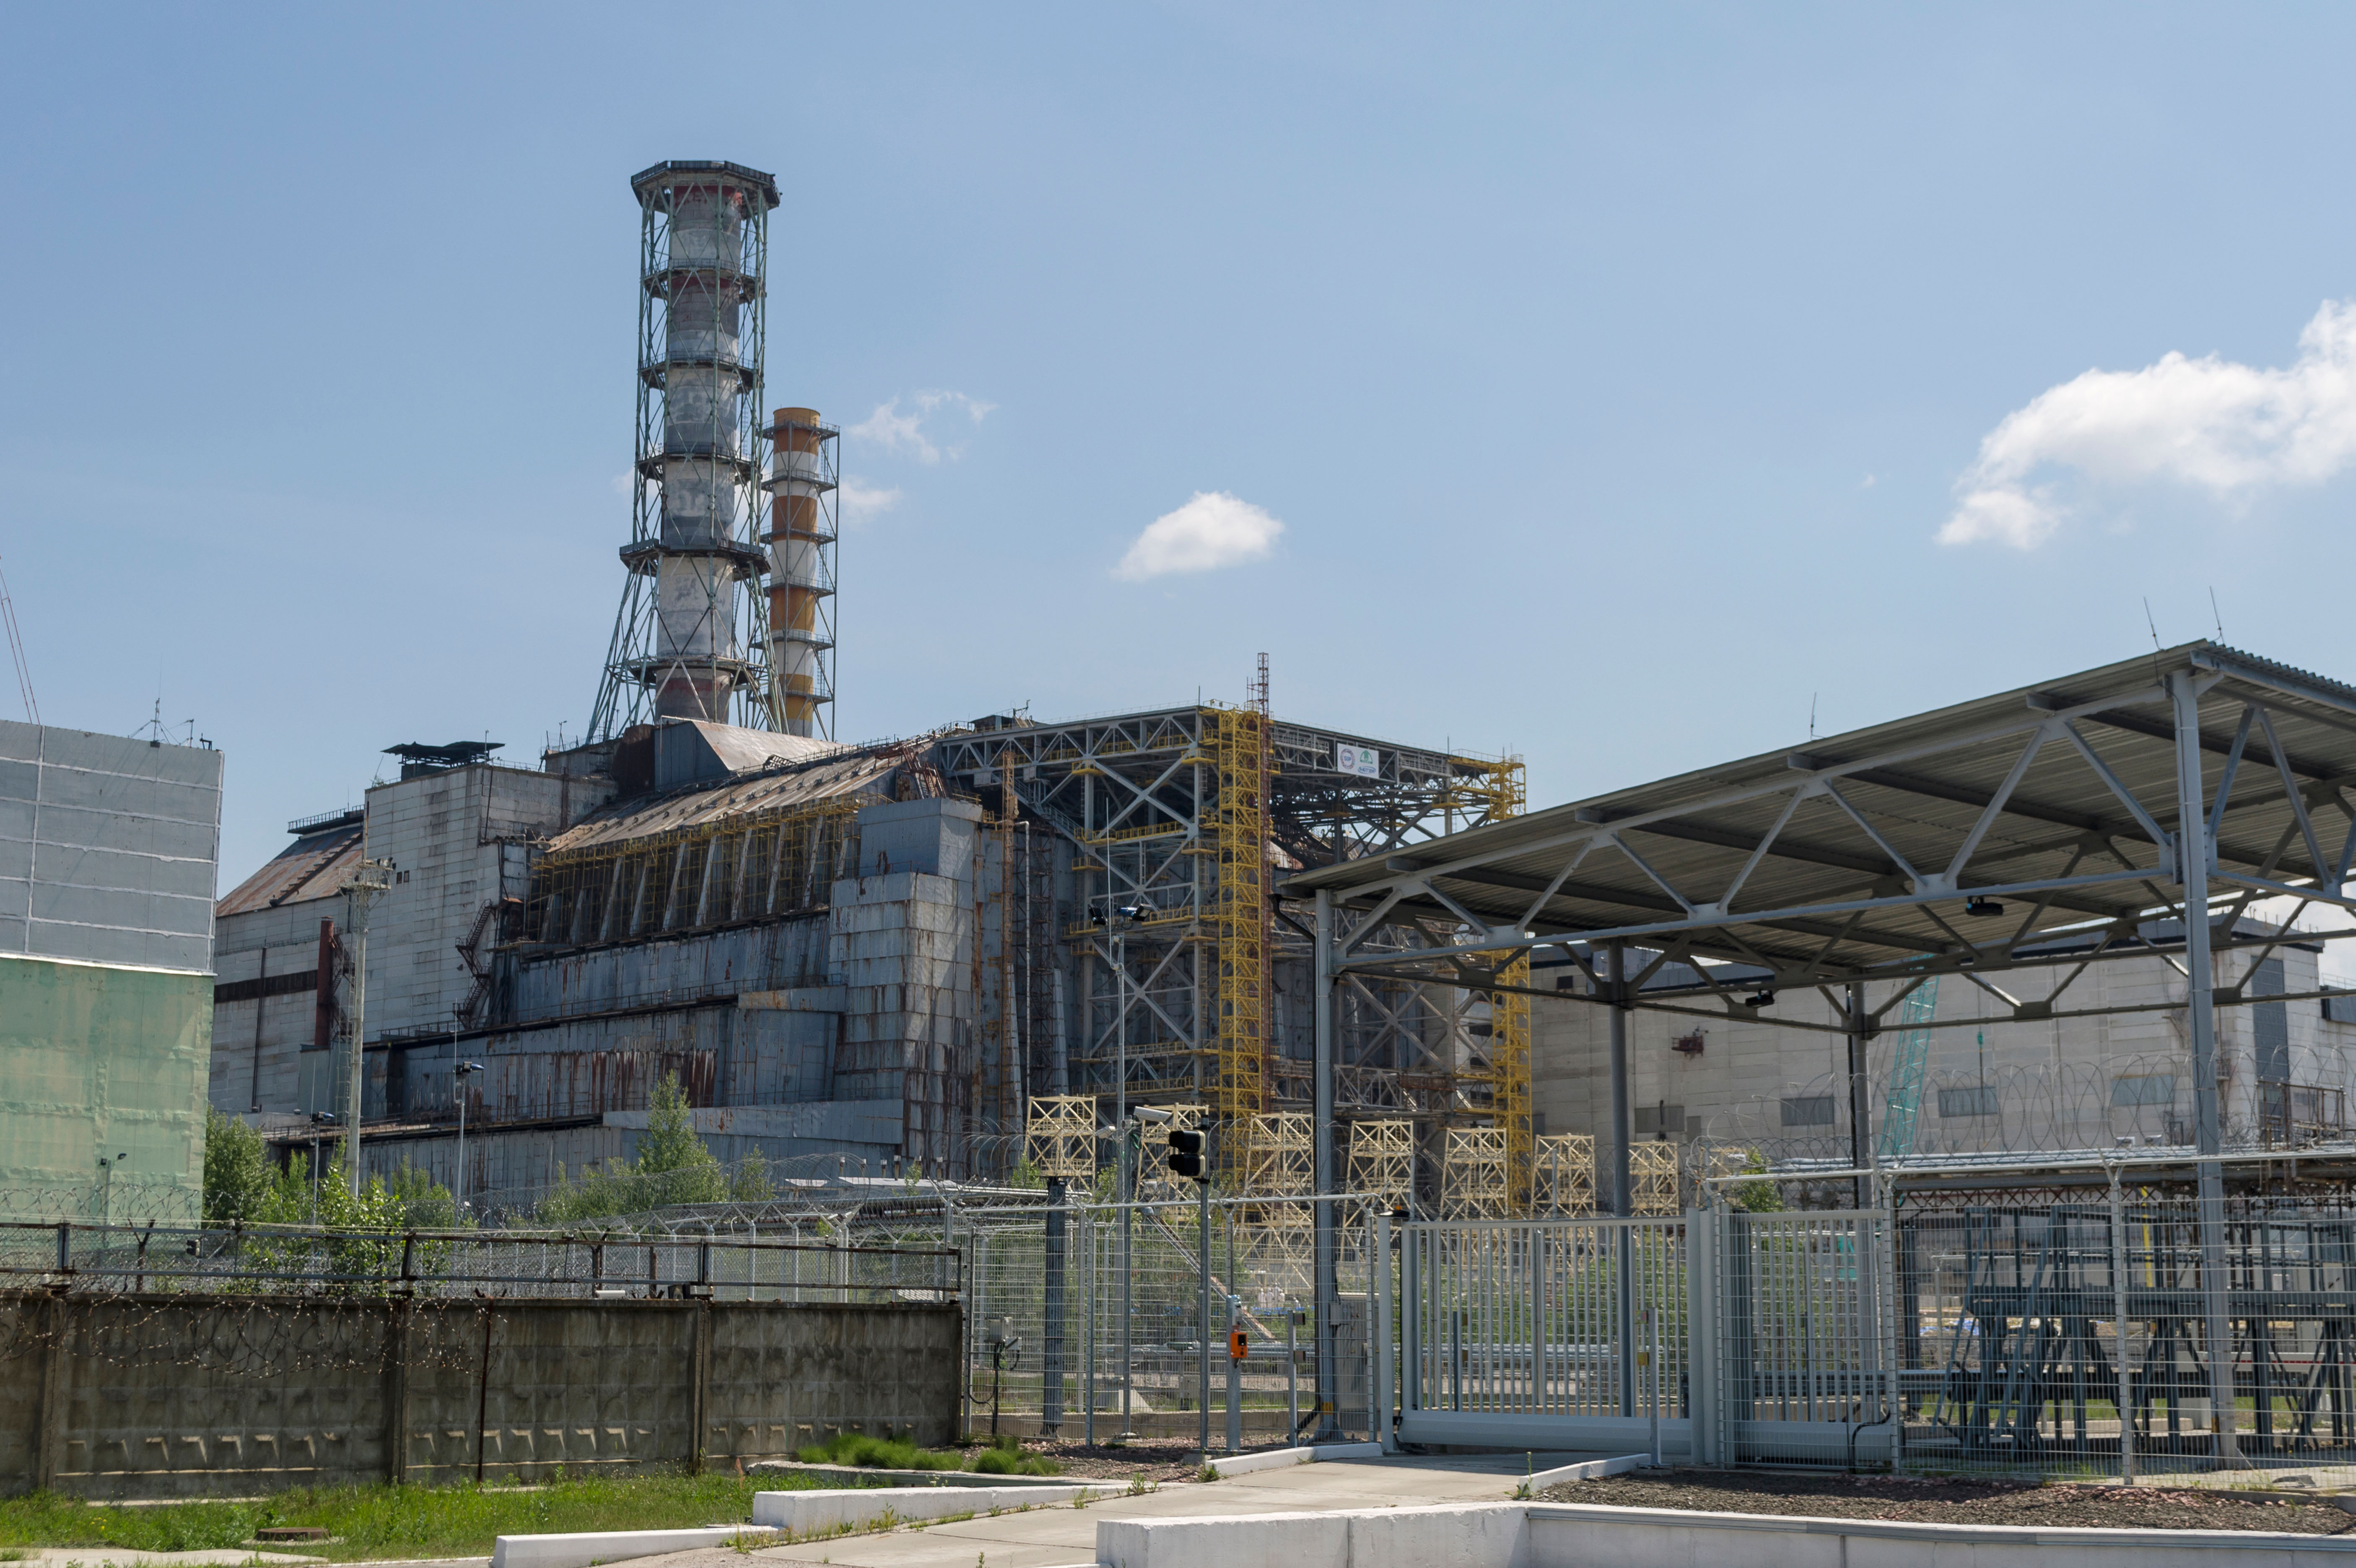 Chernobyl Nuclear Power Plant, Ukraine